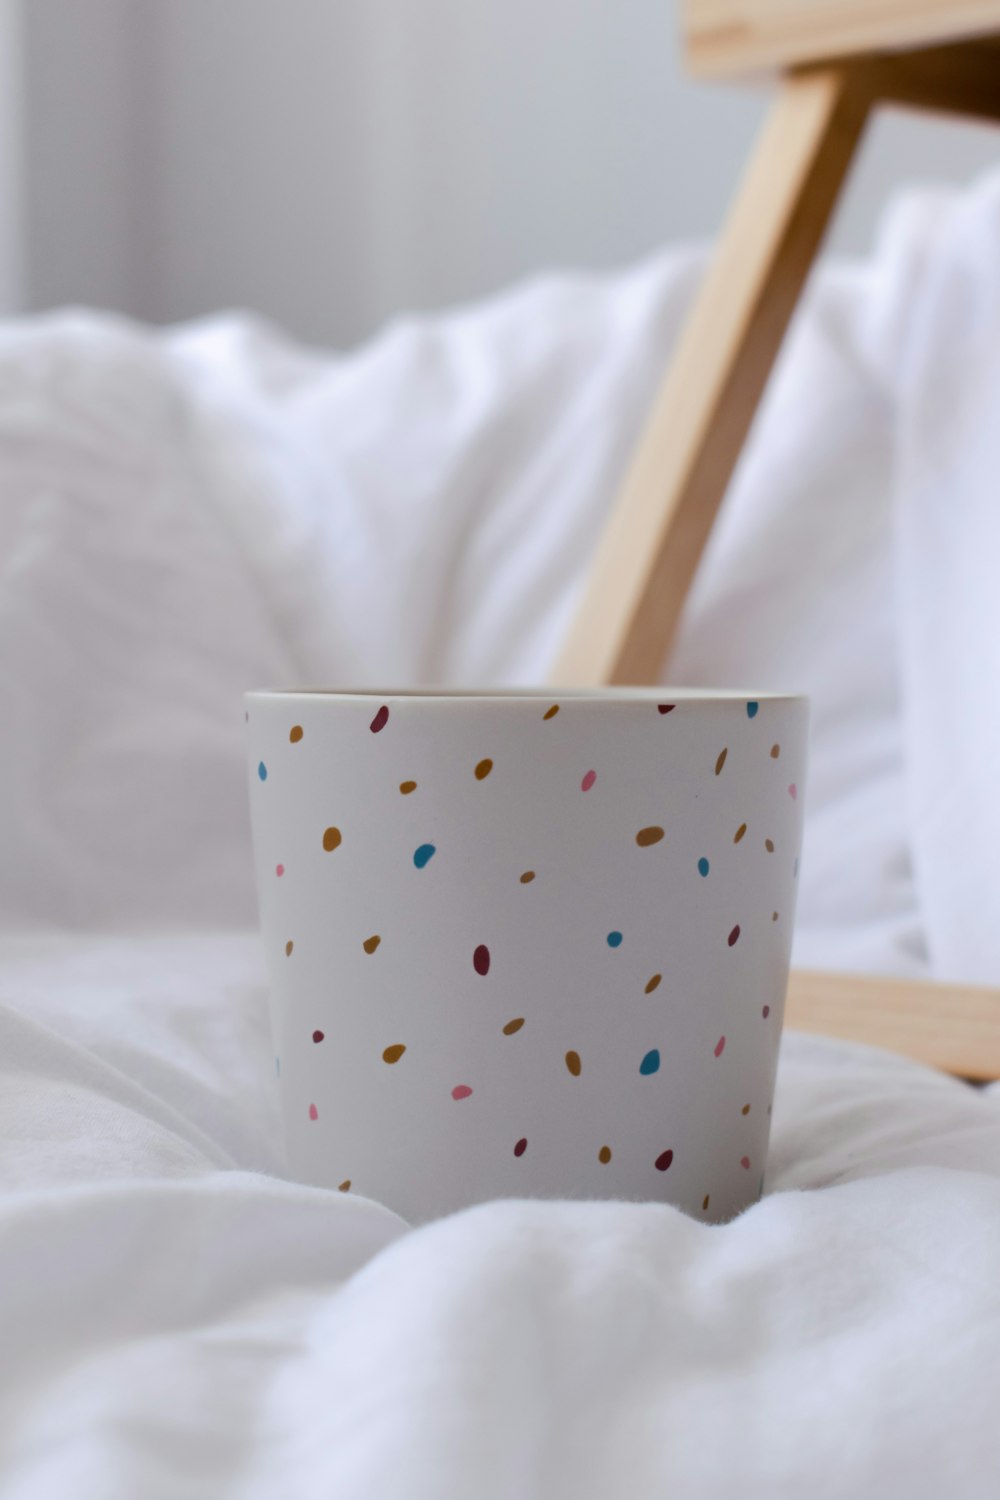 white and black polka dot ceramic mug on white textile